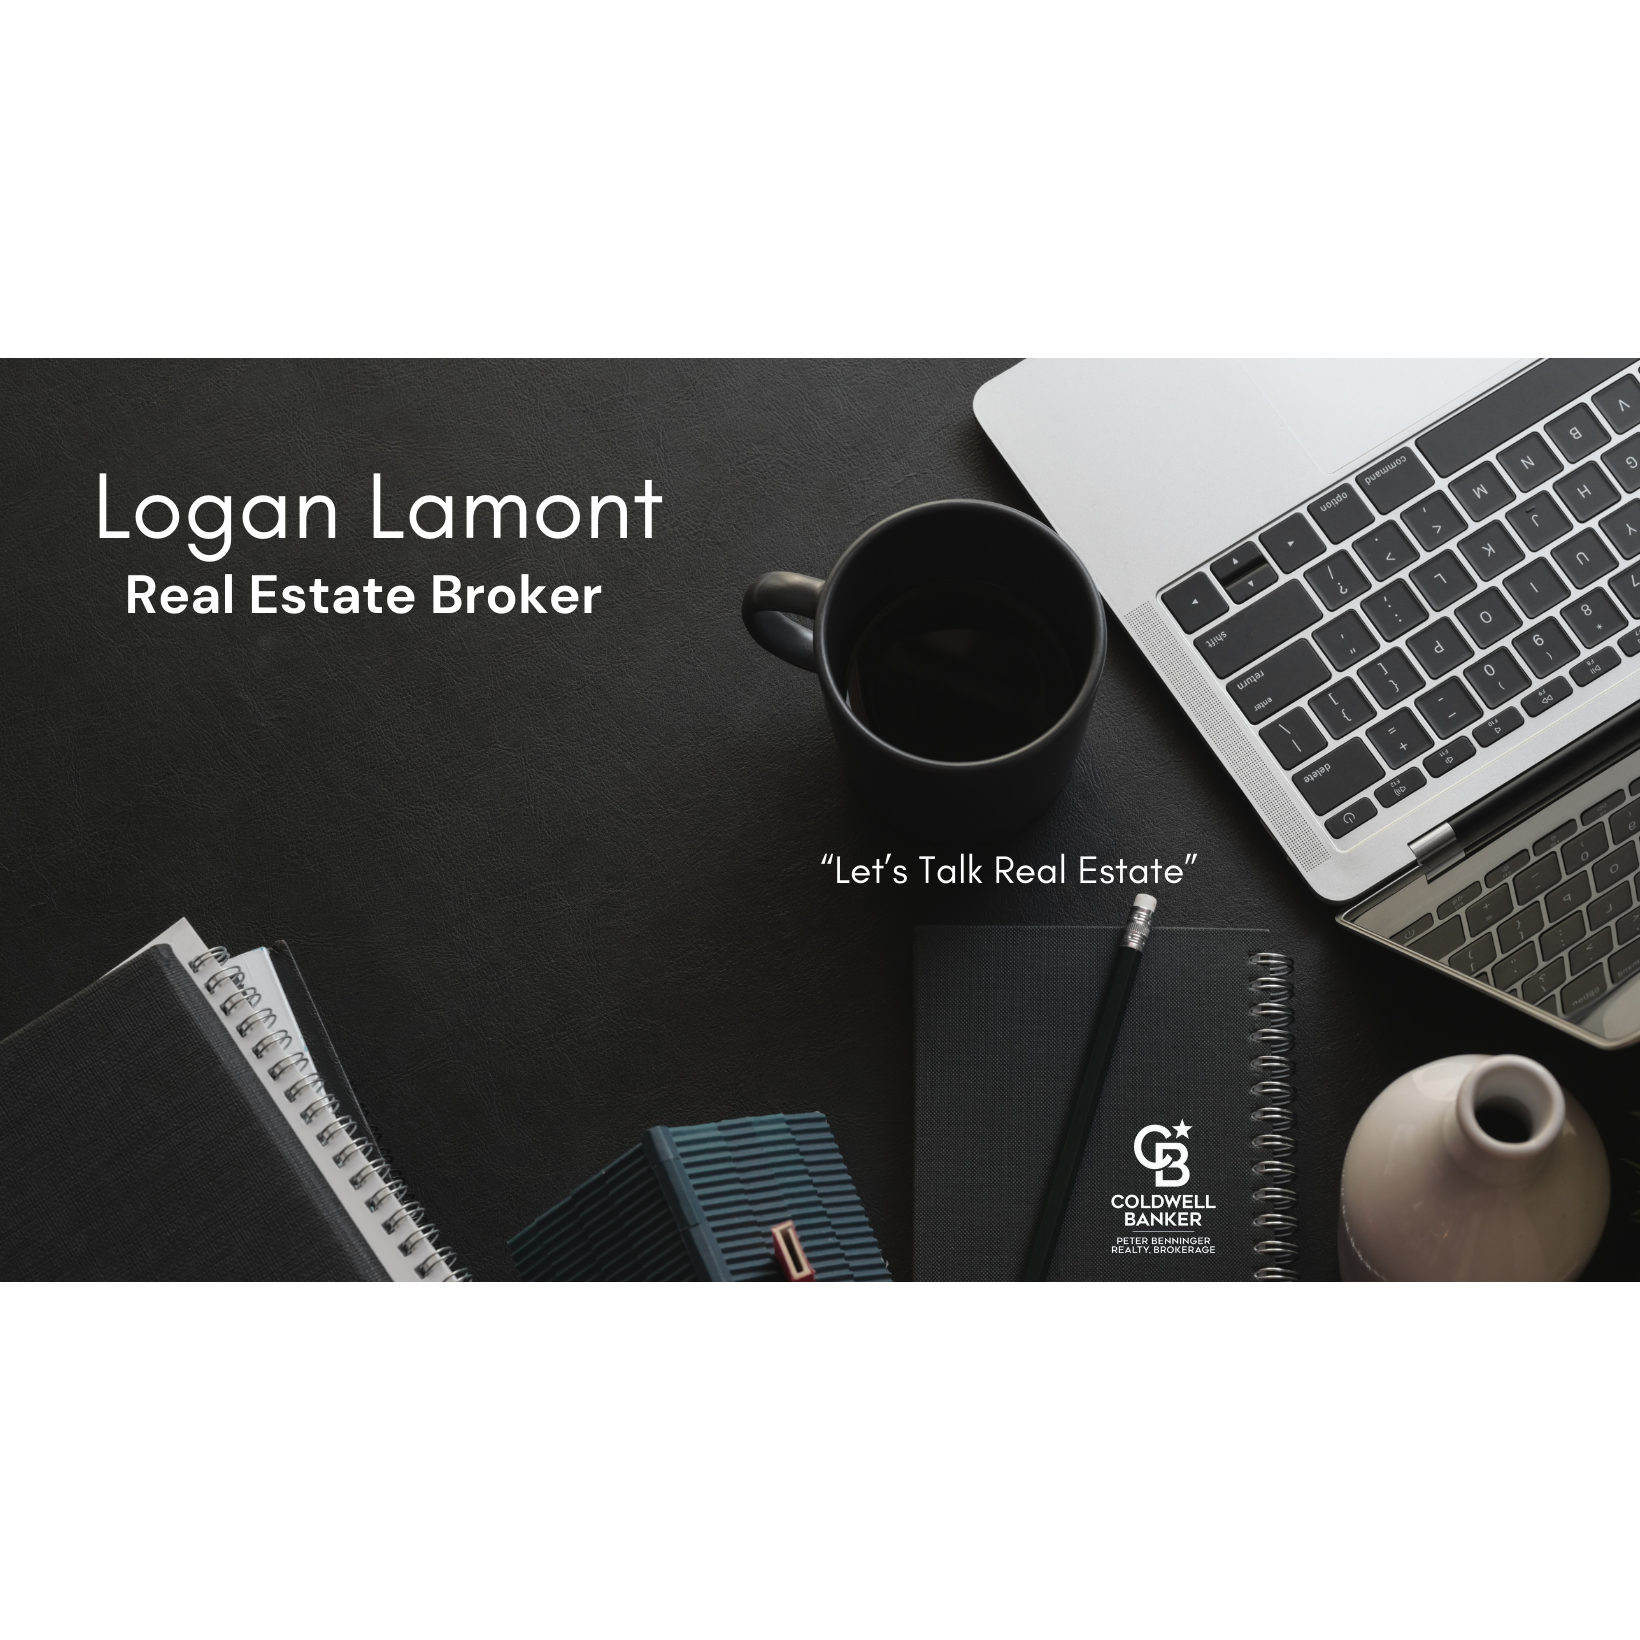 Logan Lamont Realtor